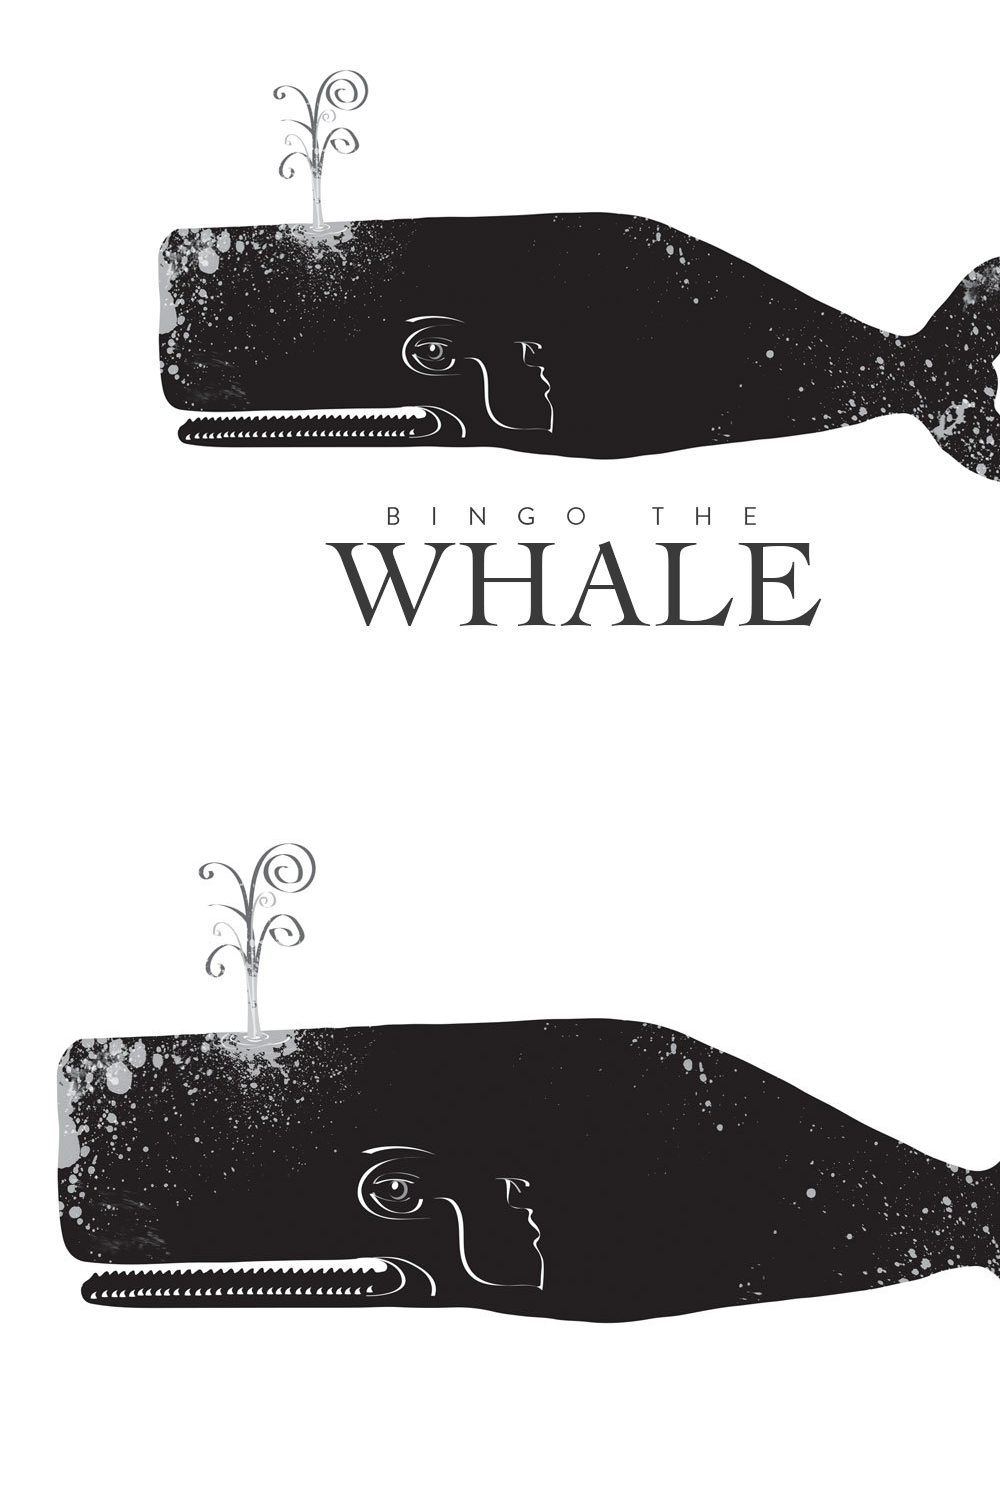 Folk Art Whale Illustration pinterest preview image.